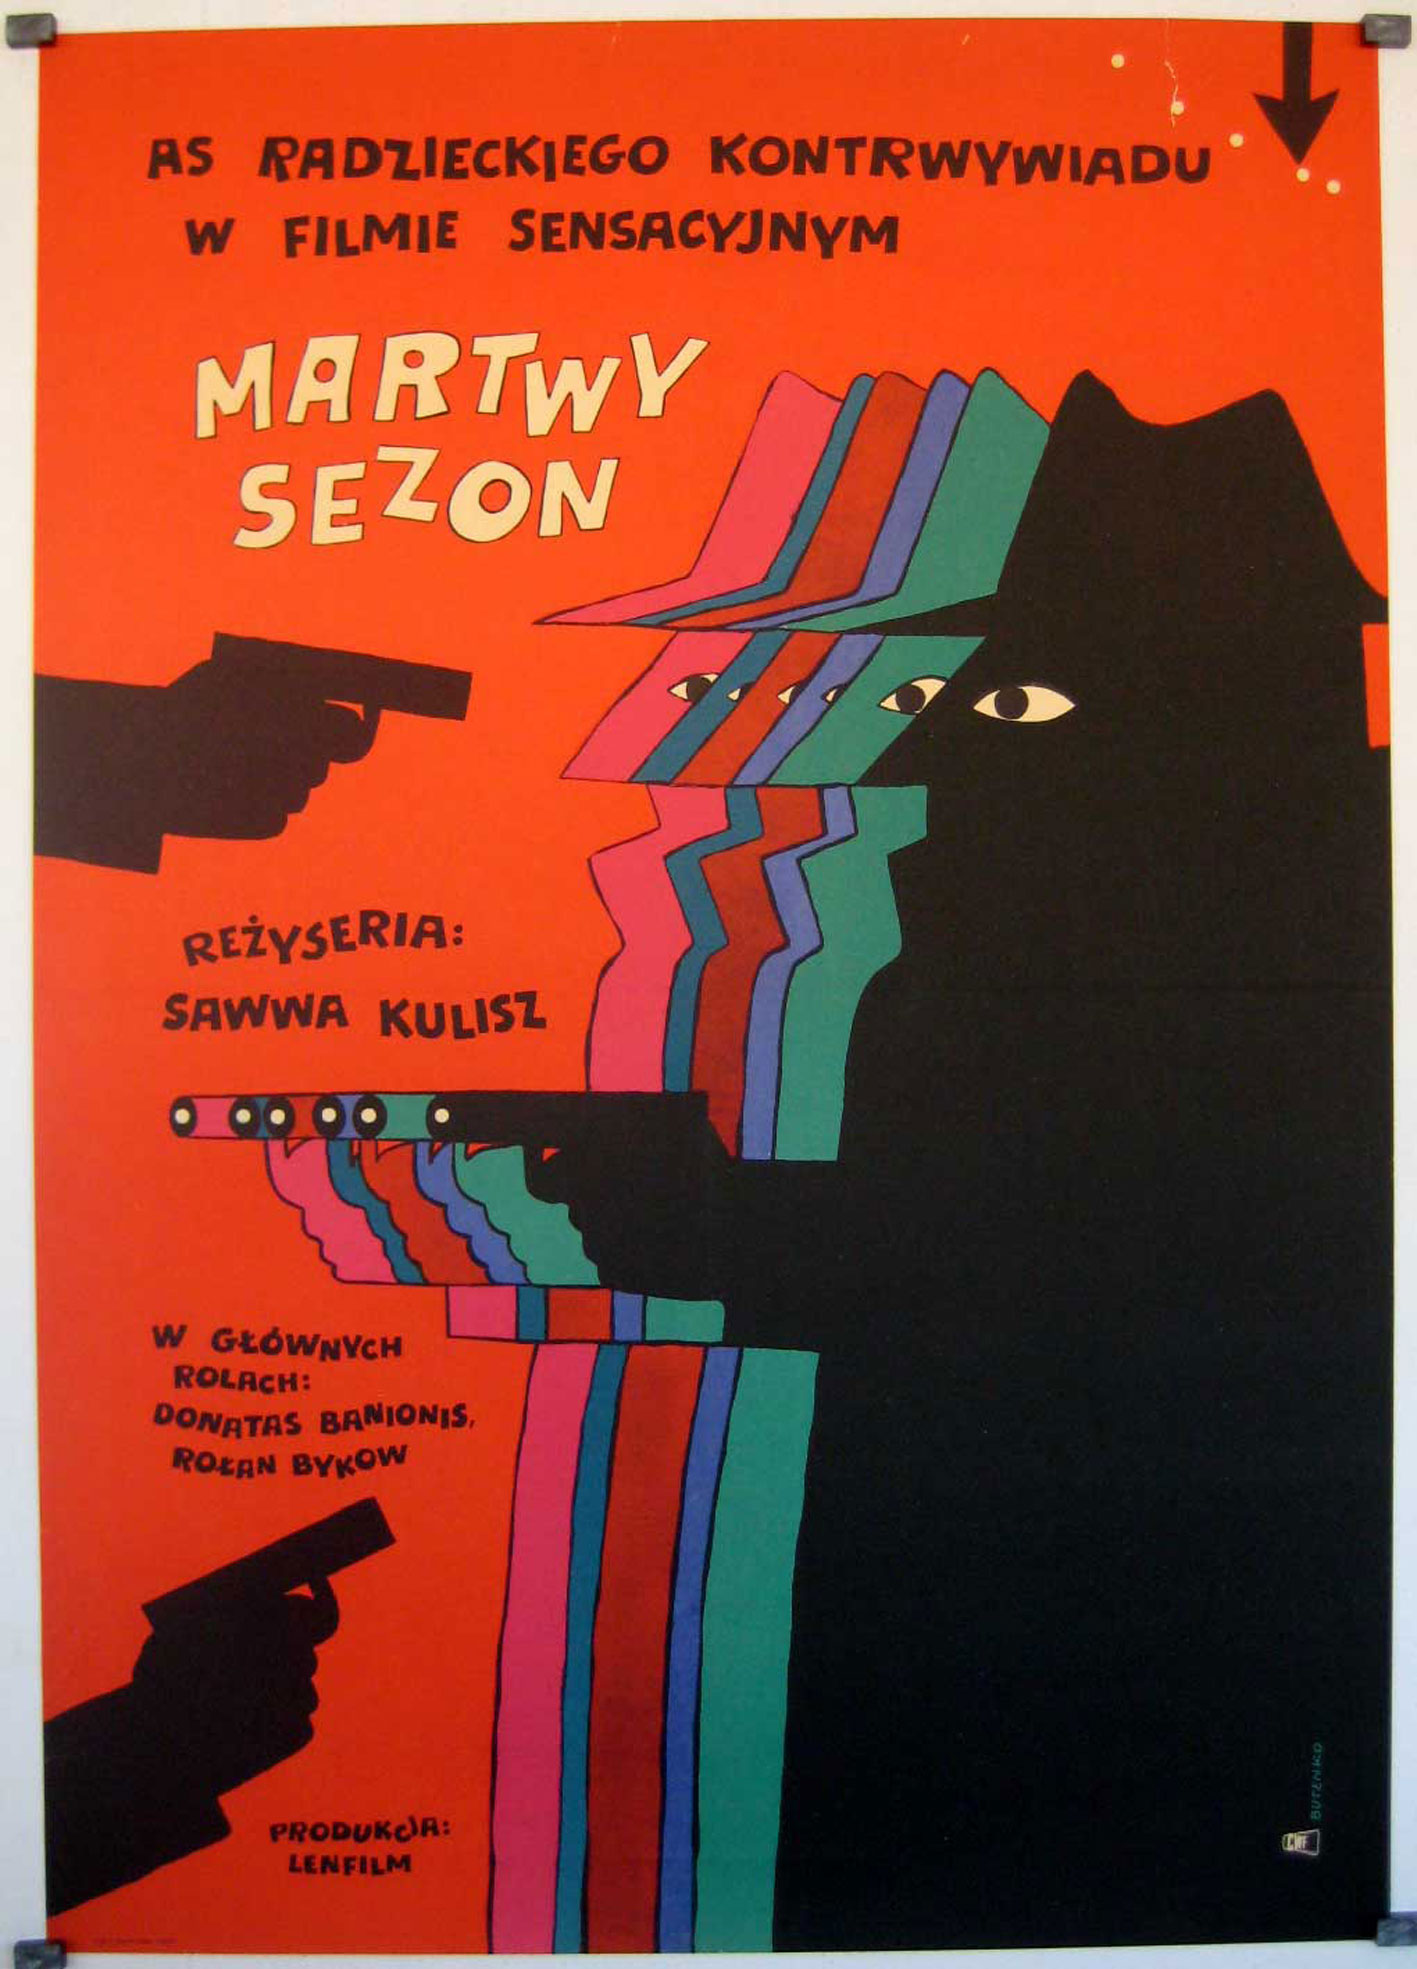 MARTWY SEZON